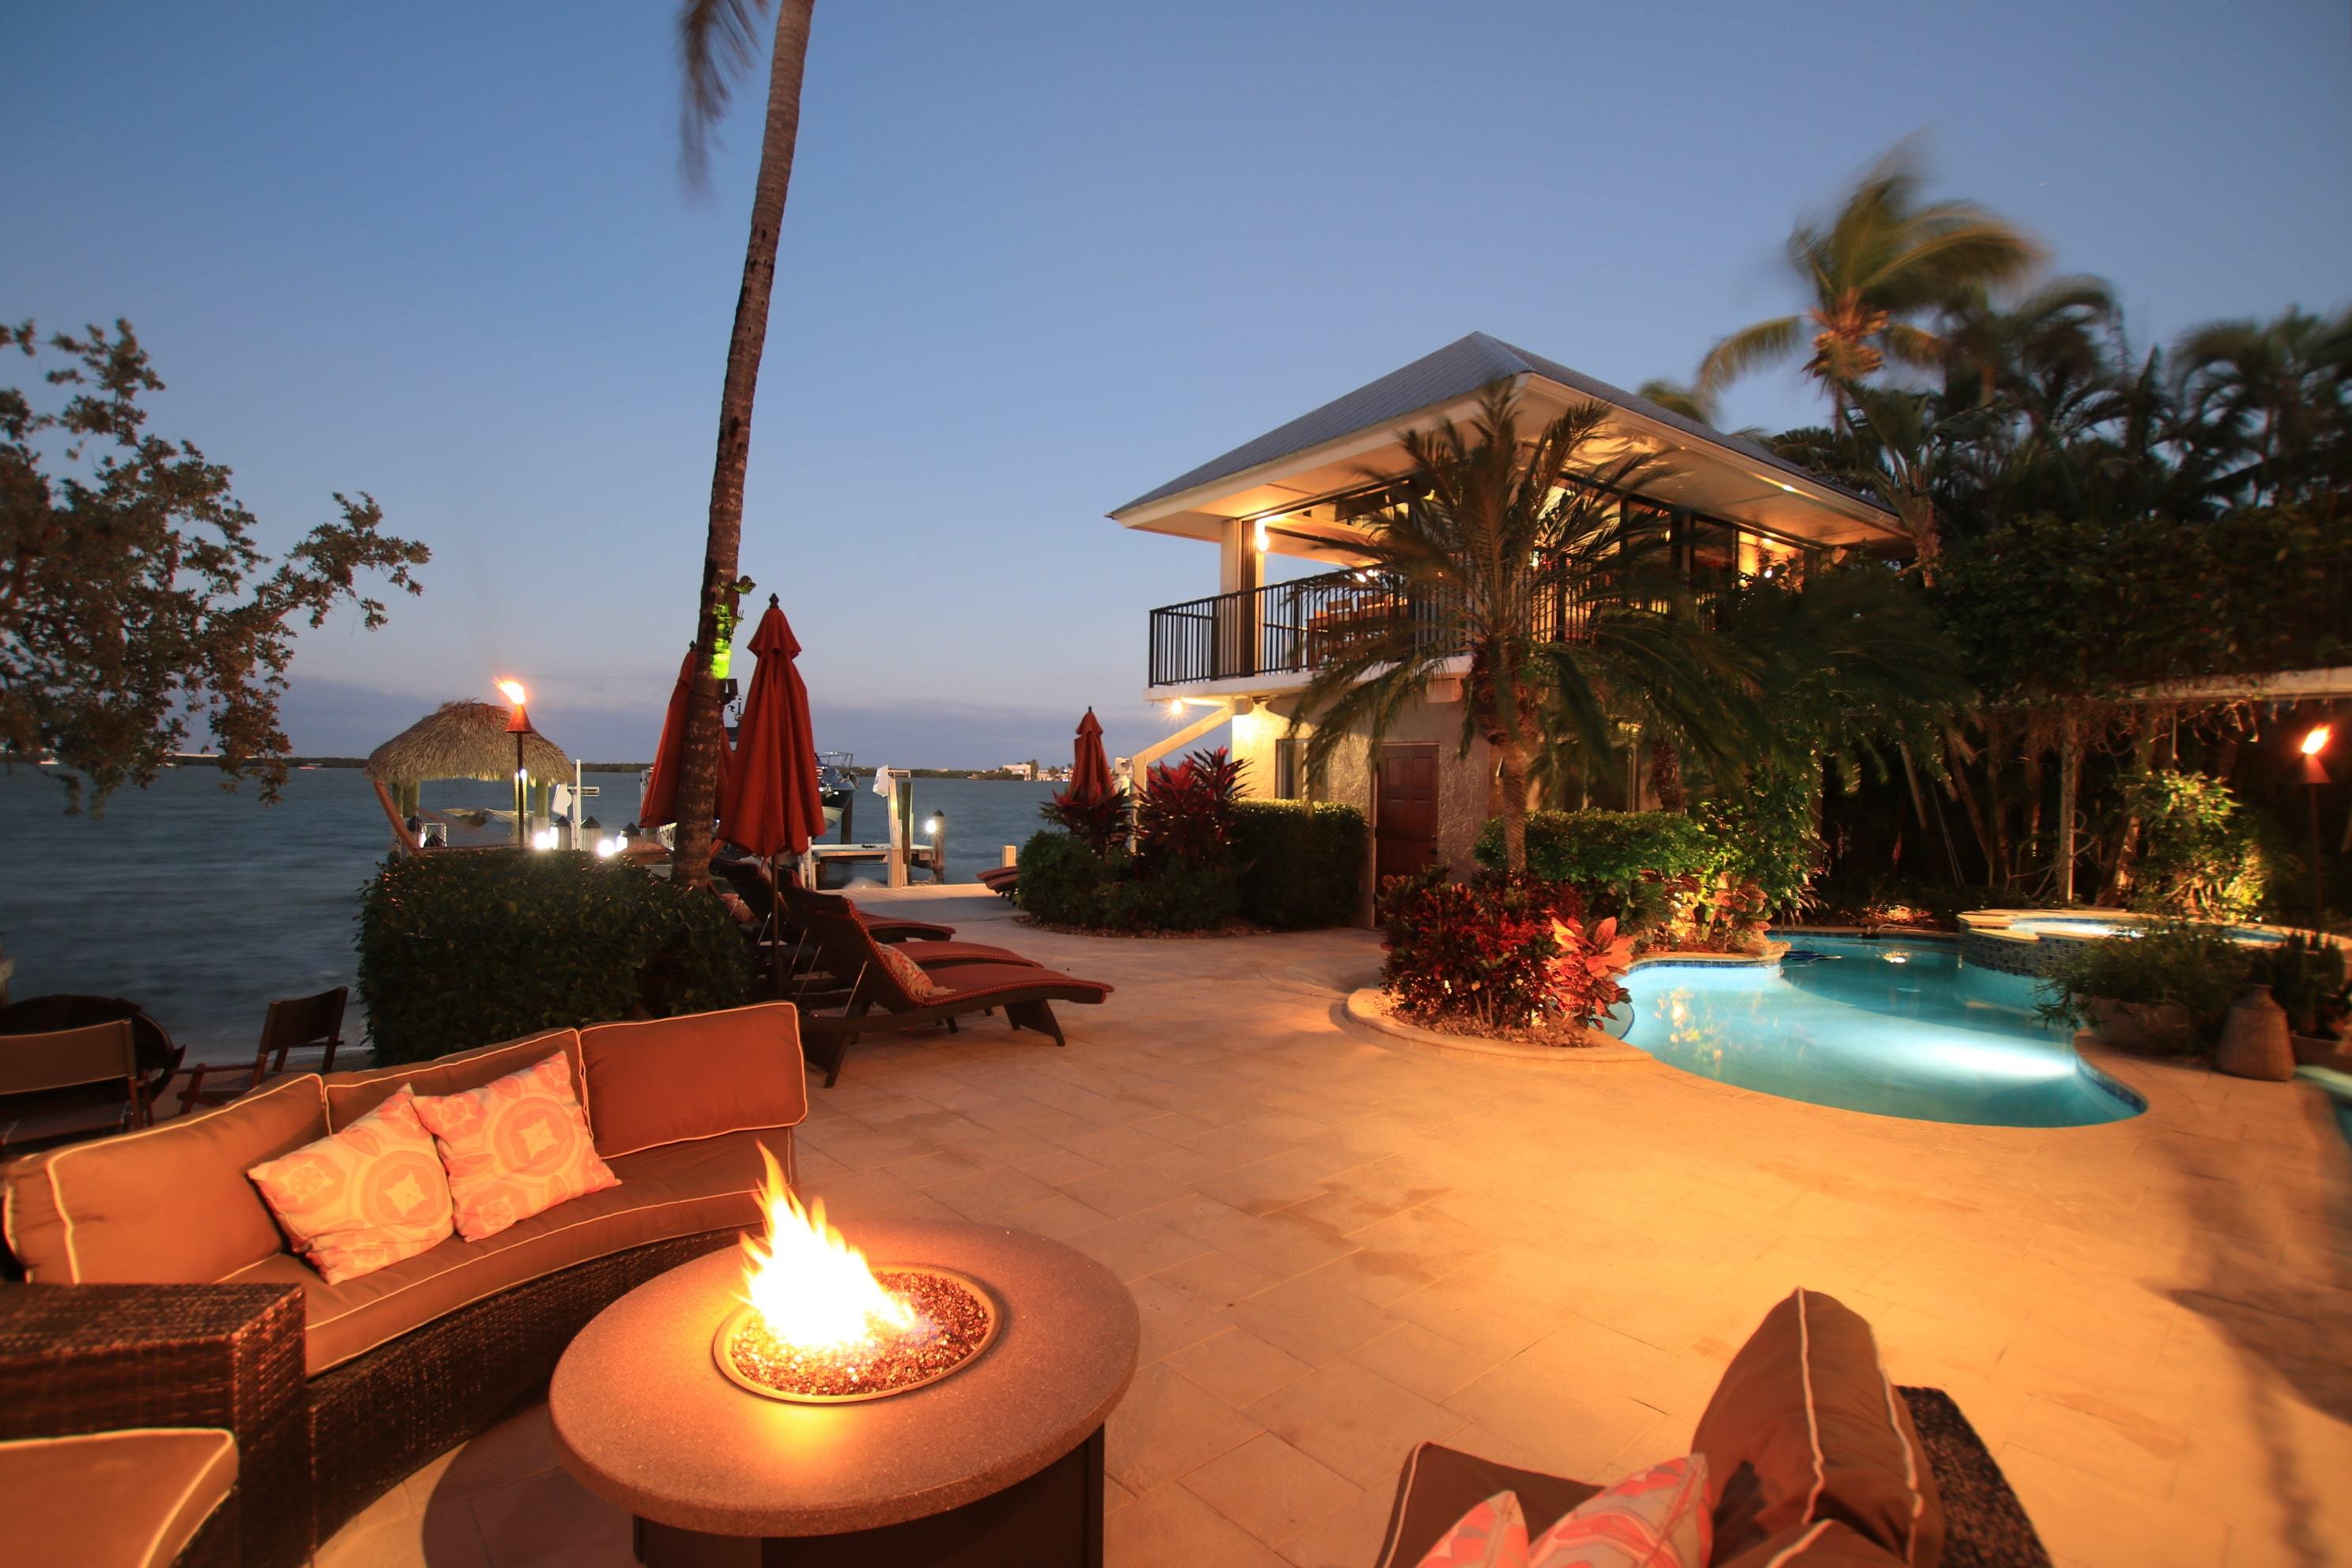 Nighttime view of Florida Keys waterfront from backyard pool